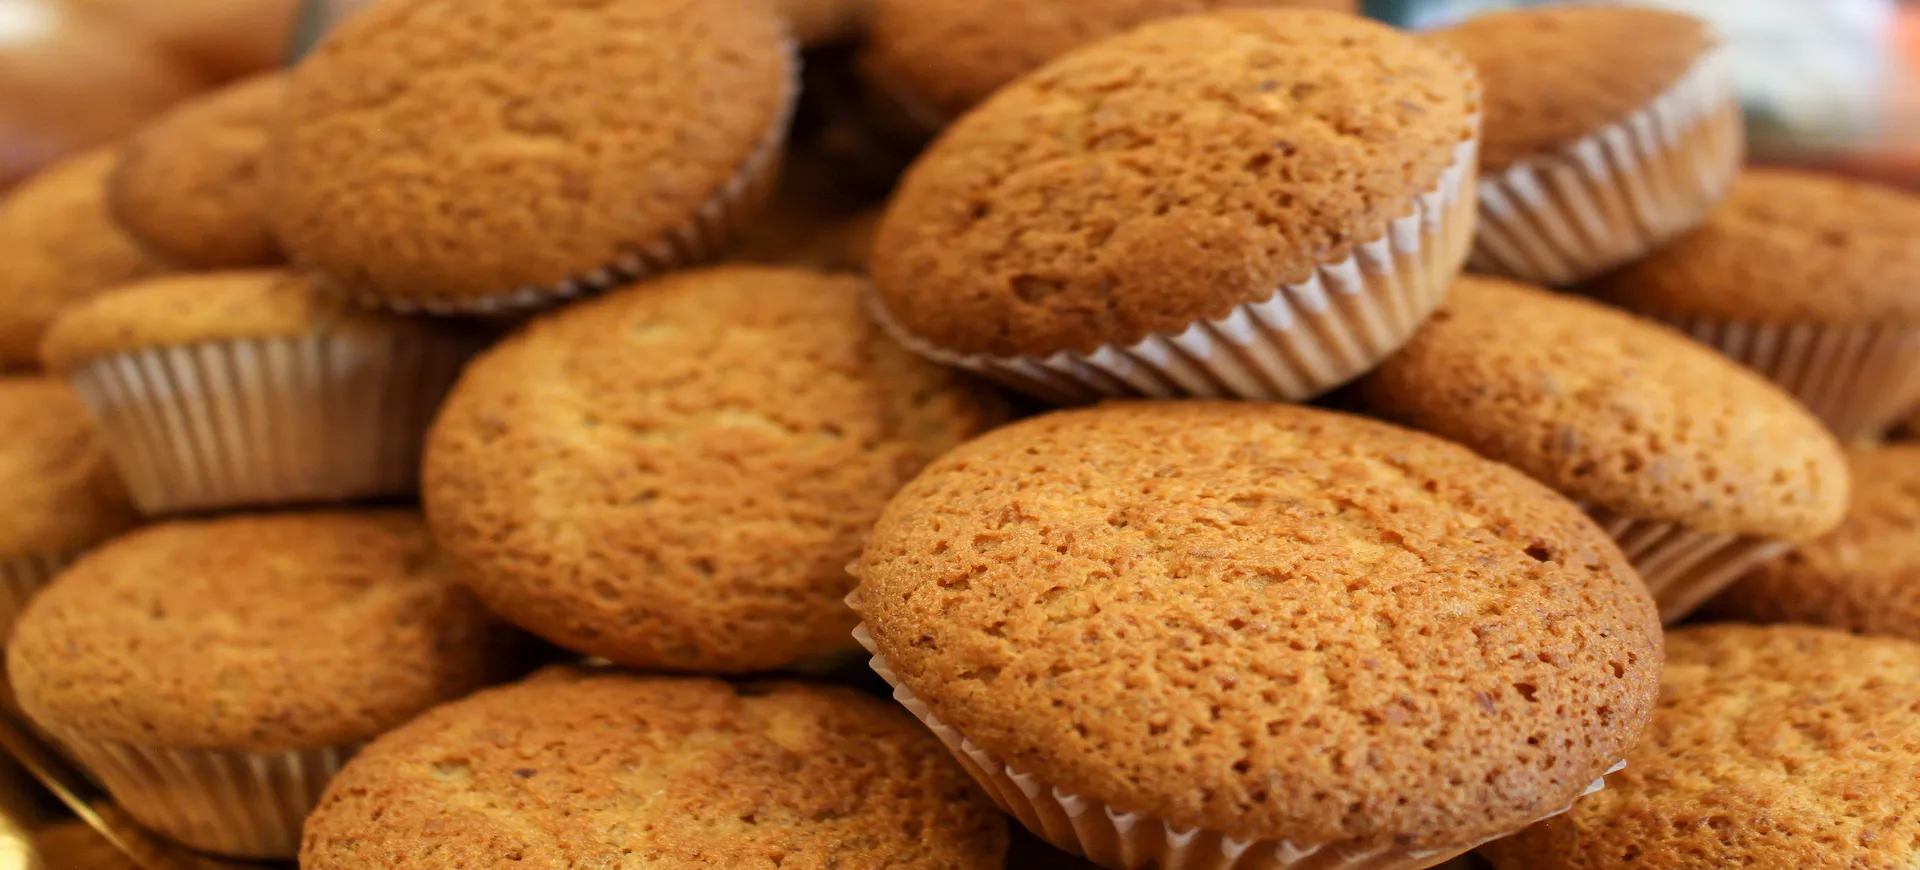 Artisan almond muffins